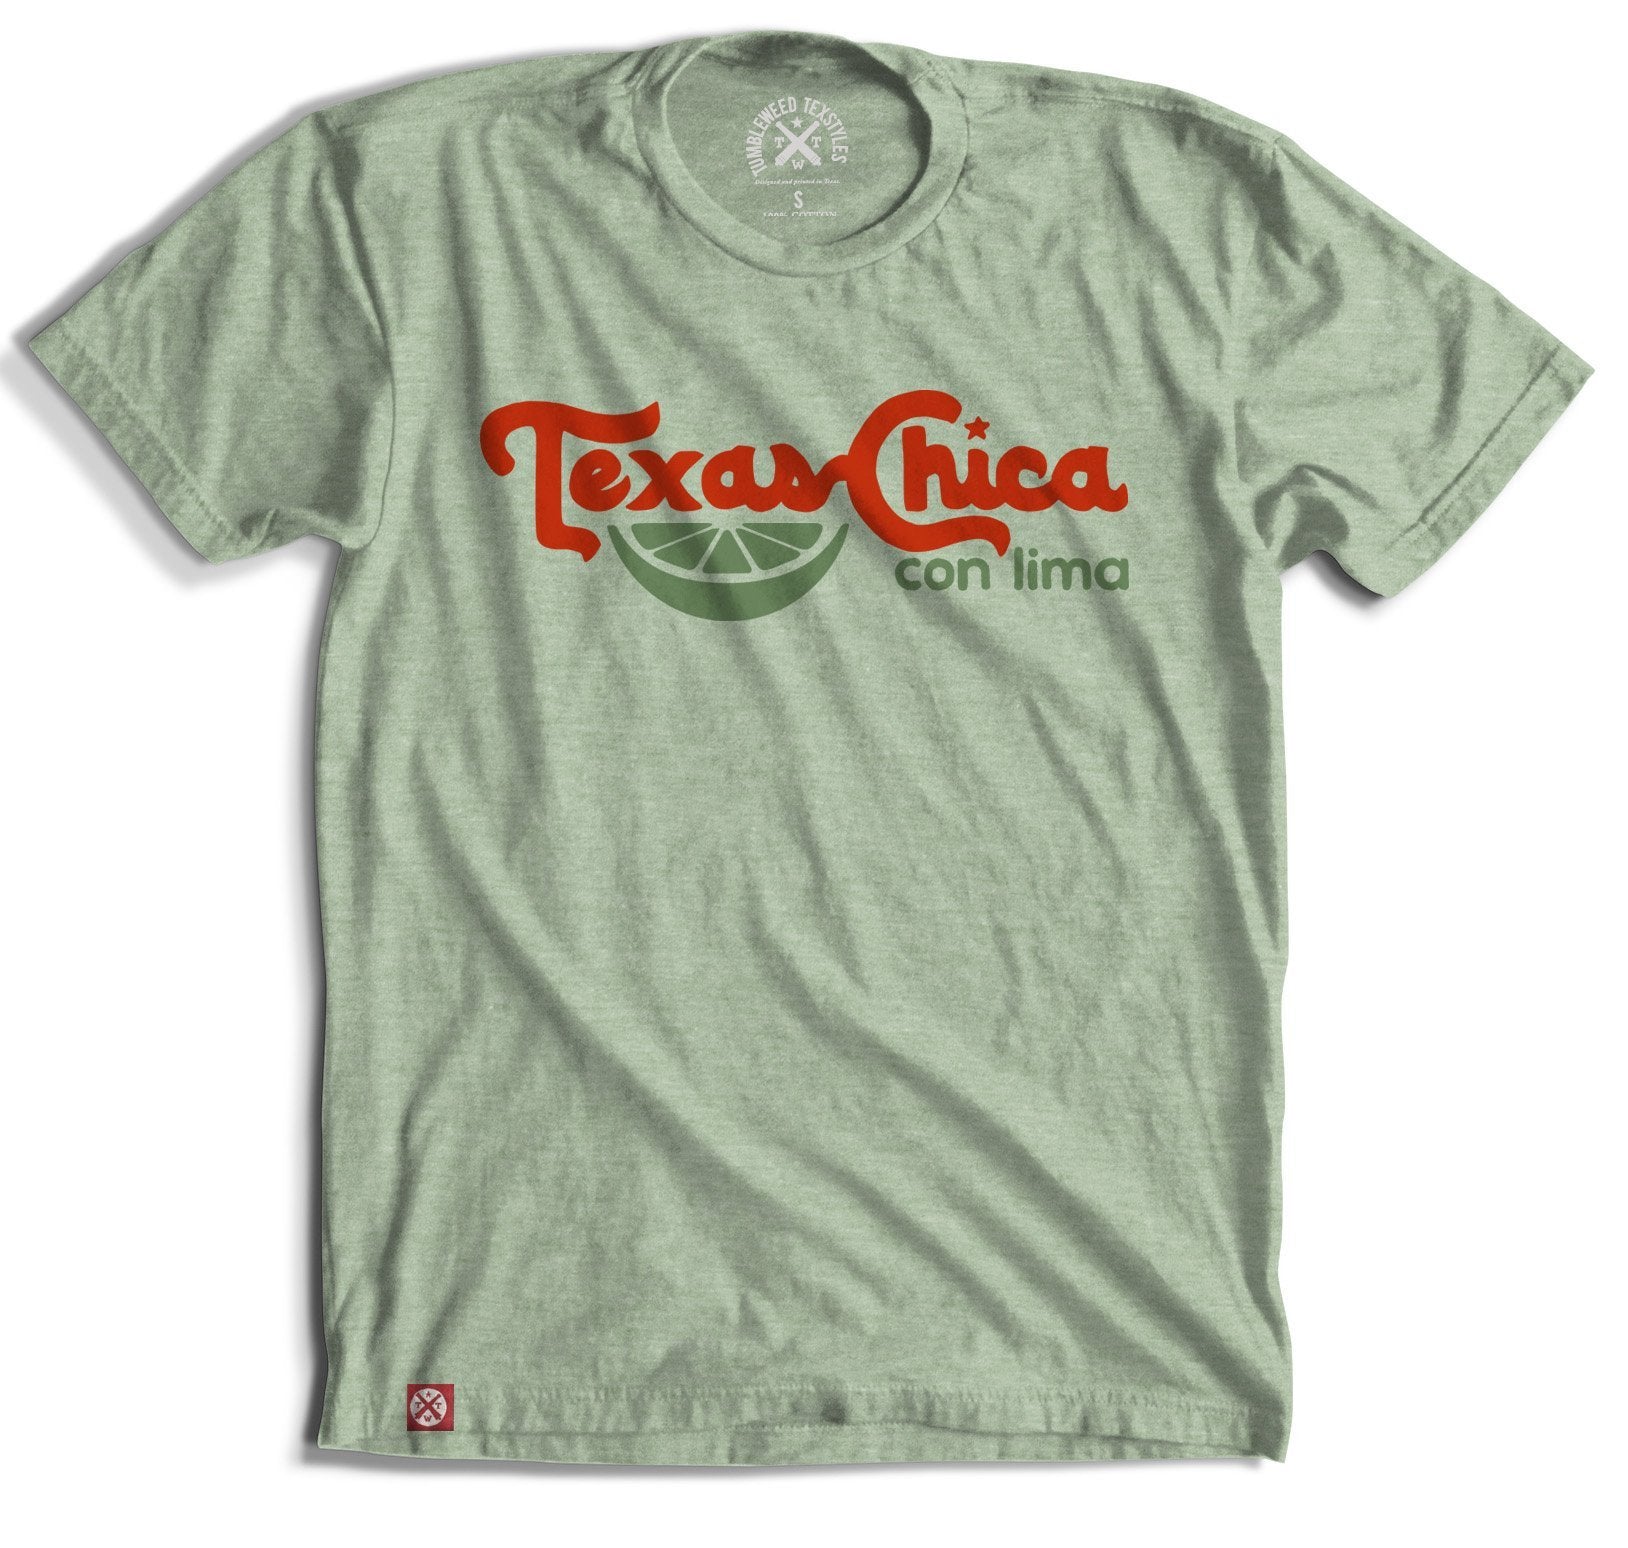 Texas Chica con Lima T-Shirt